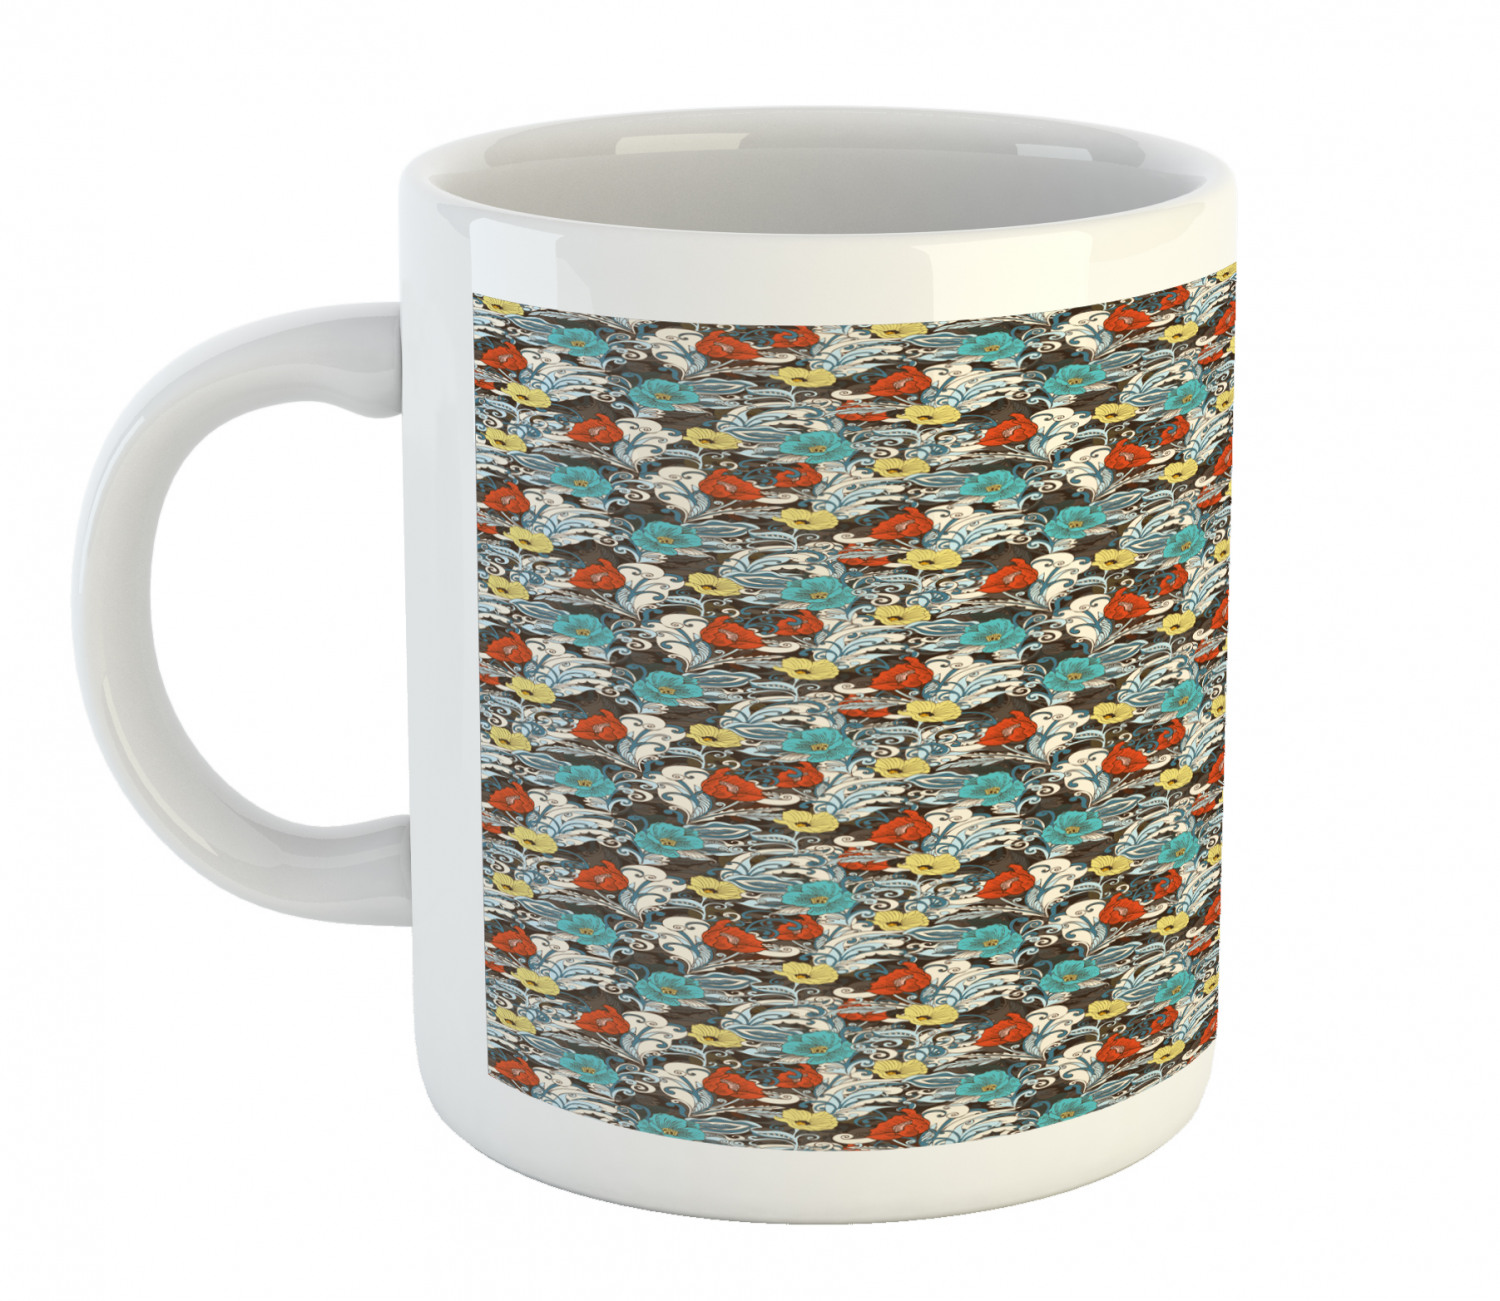 Botanical Floral Ceramic Coffee Mug Cup for Water Tea Drinks, 11 oz | eBay